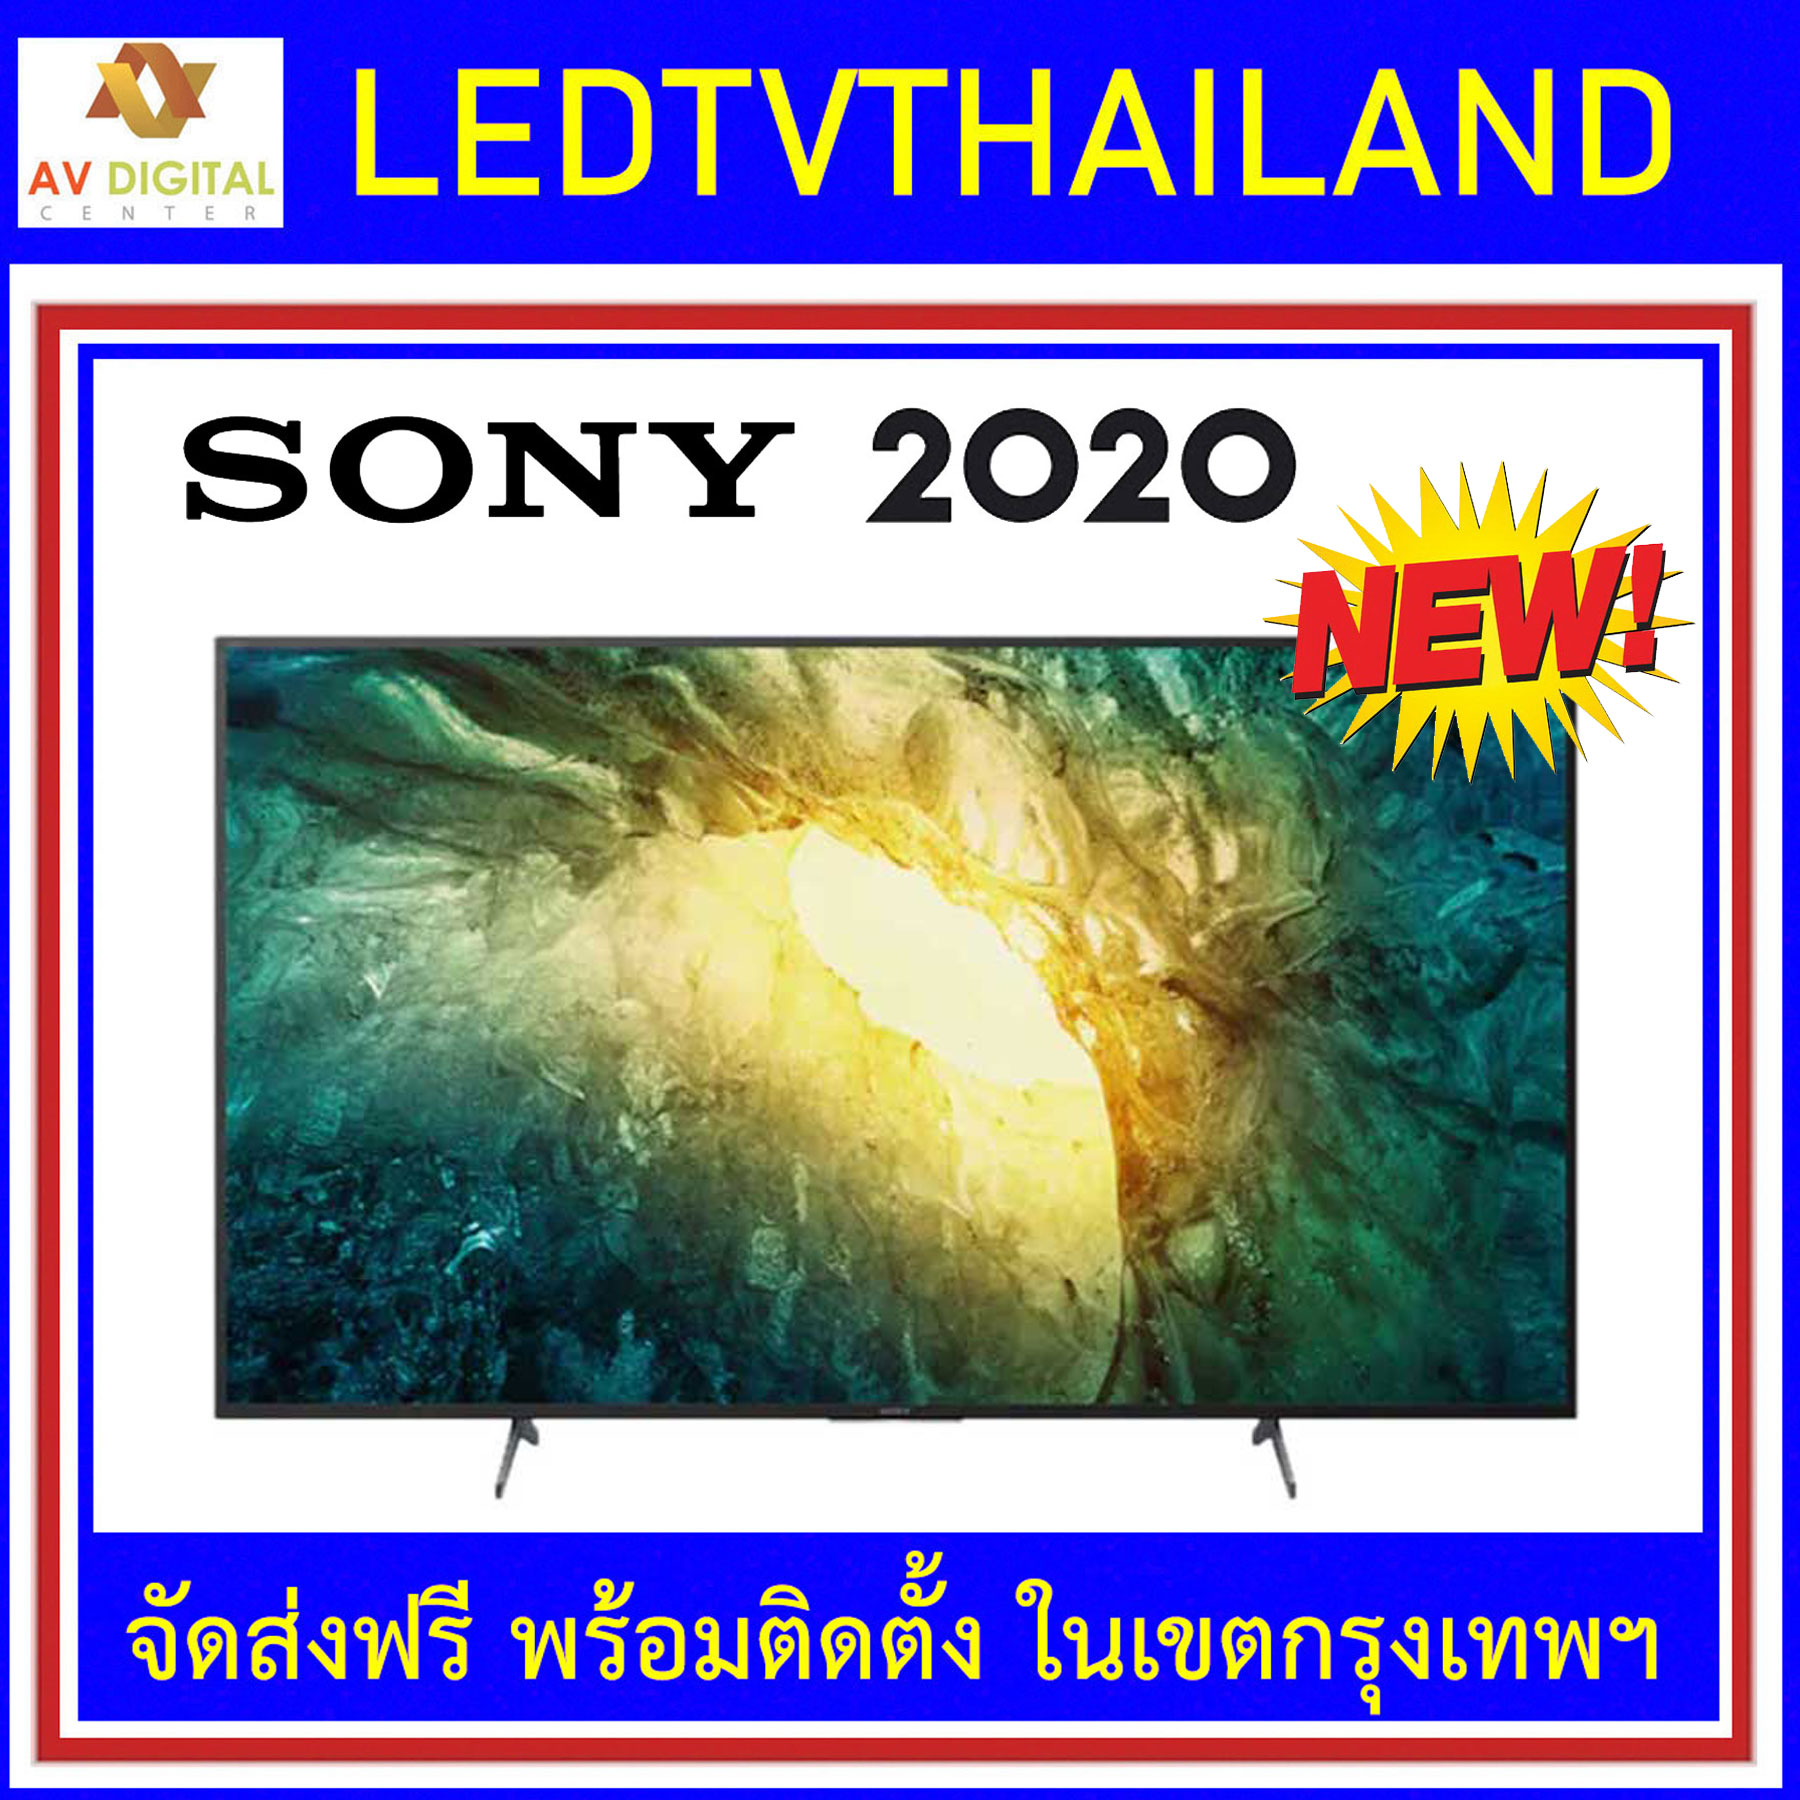 SONY LED TV KD-49X7500H 4K Ultra HD | High Dynamic Range (HDR) | Smart
TV (Android TV) ขนาด 49 นิ้ว ใหม่ 2020